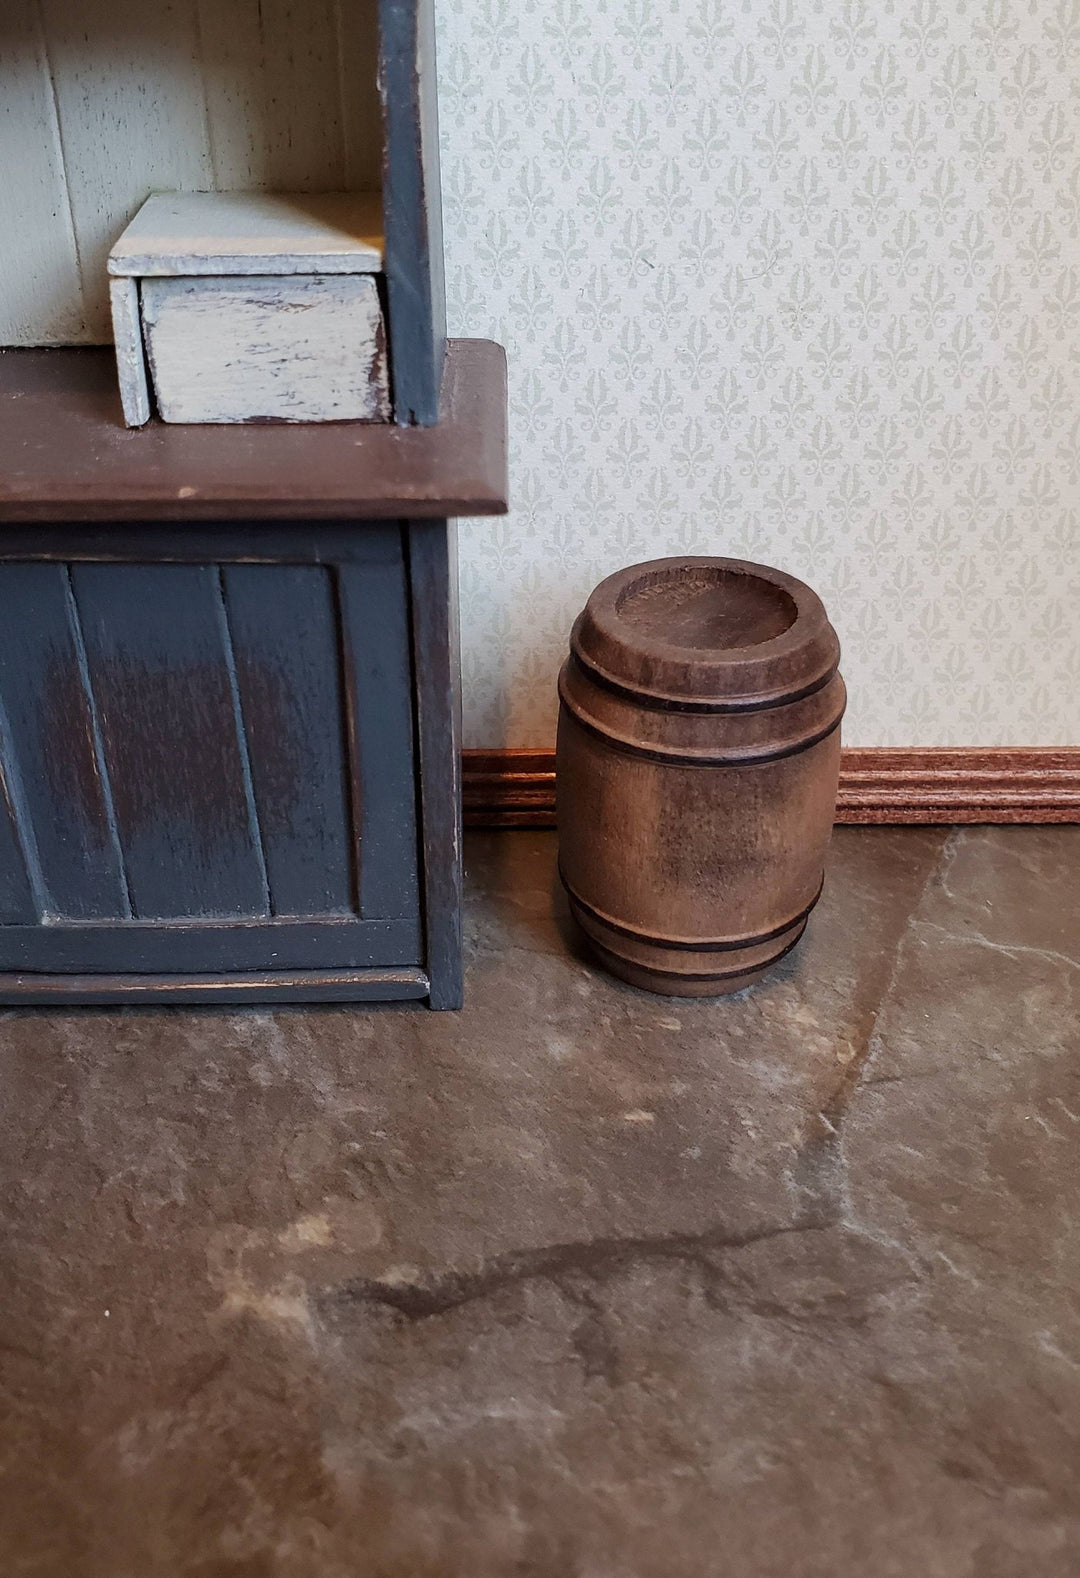 Dollhouse Miniature Barrel Small Distress Painted Wood 1:12 Scale Wooden Keg - Miniature Crush